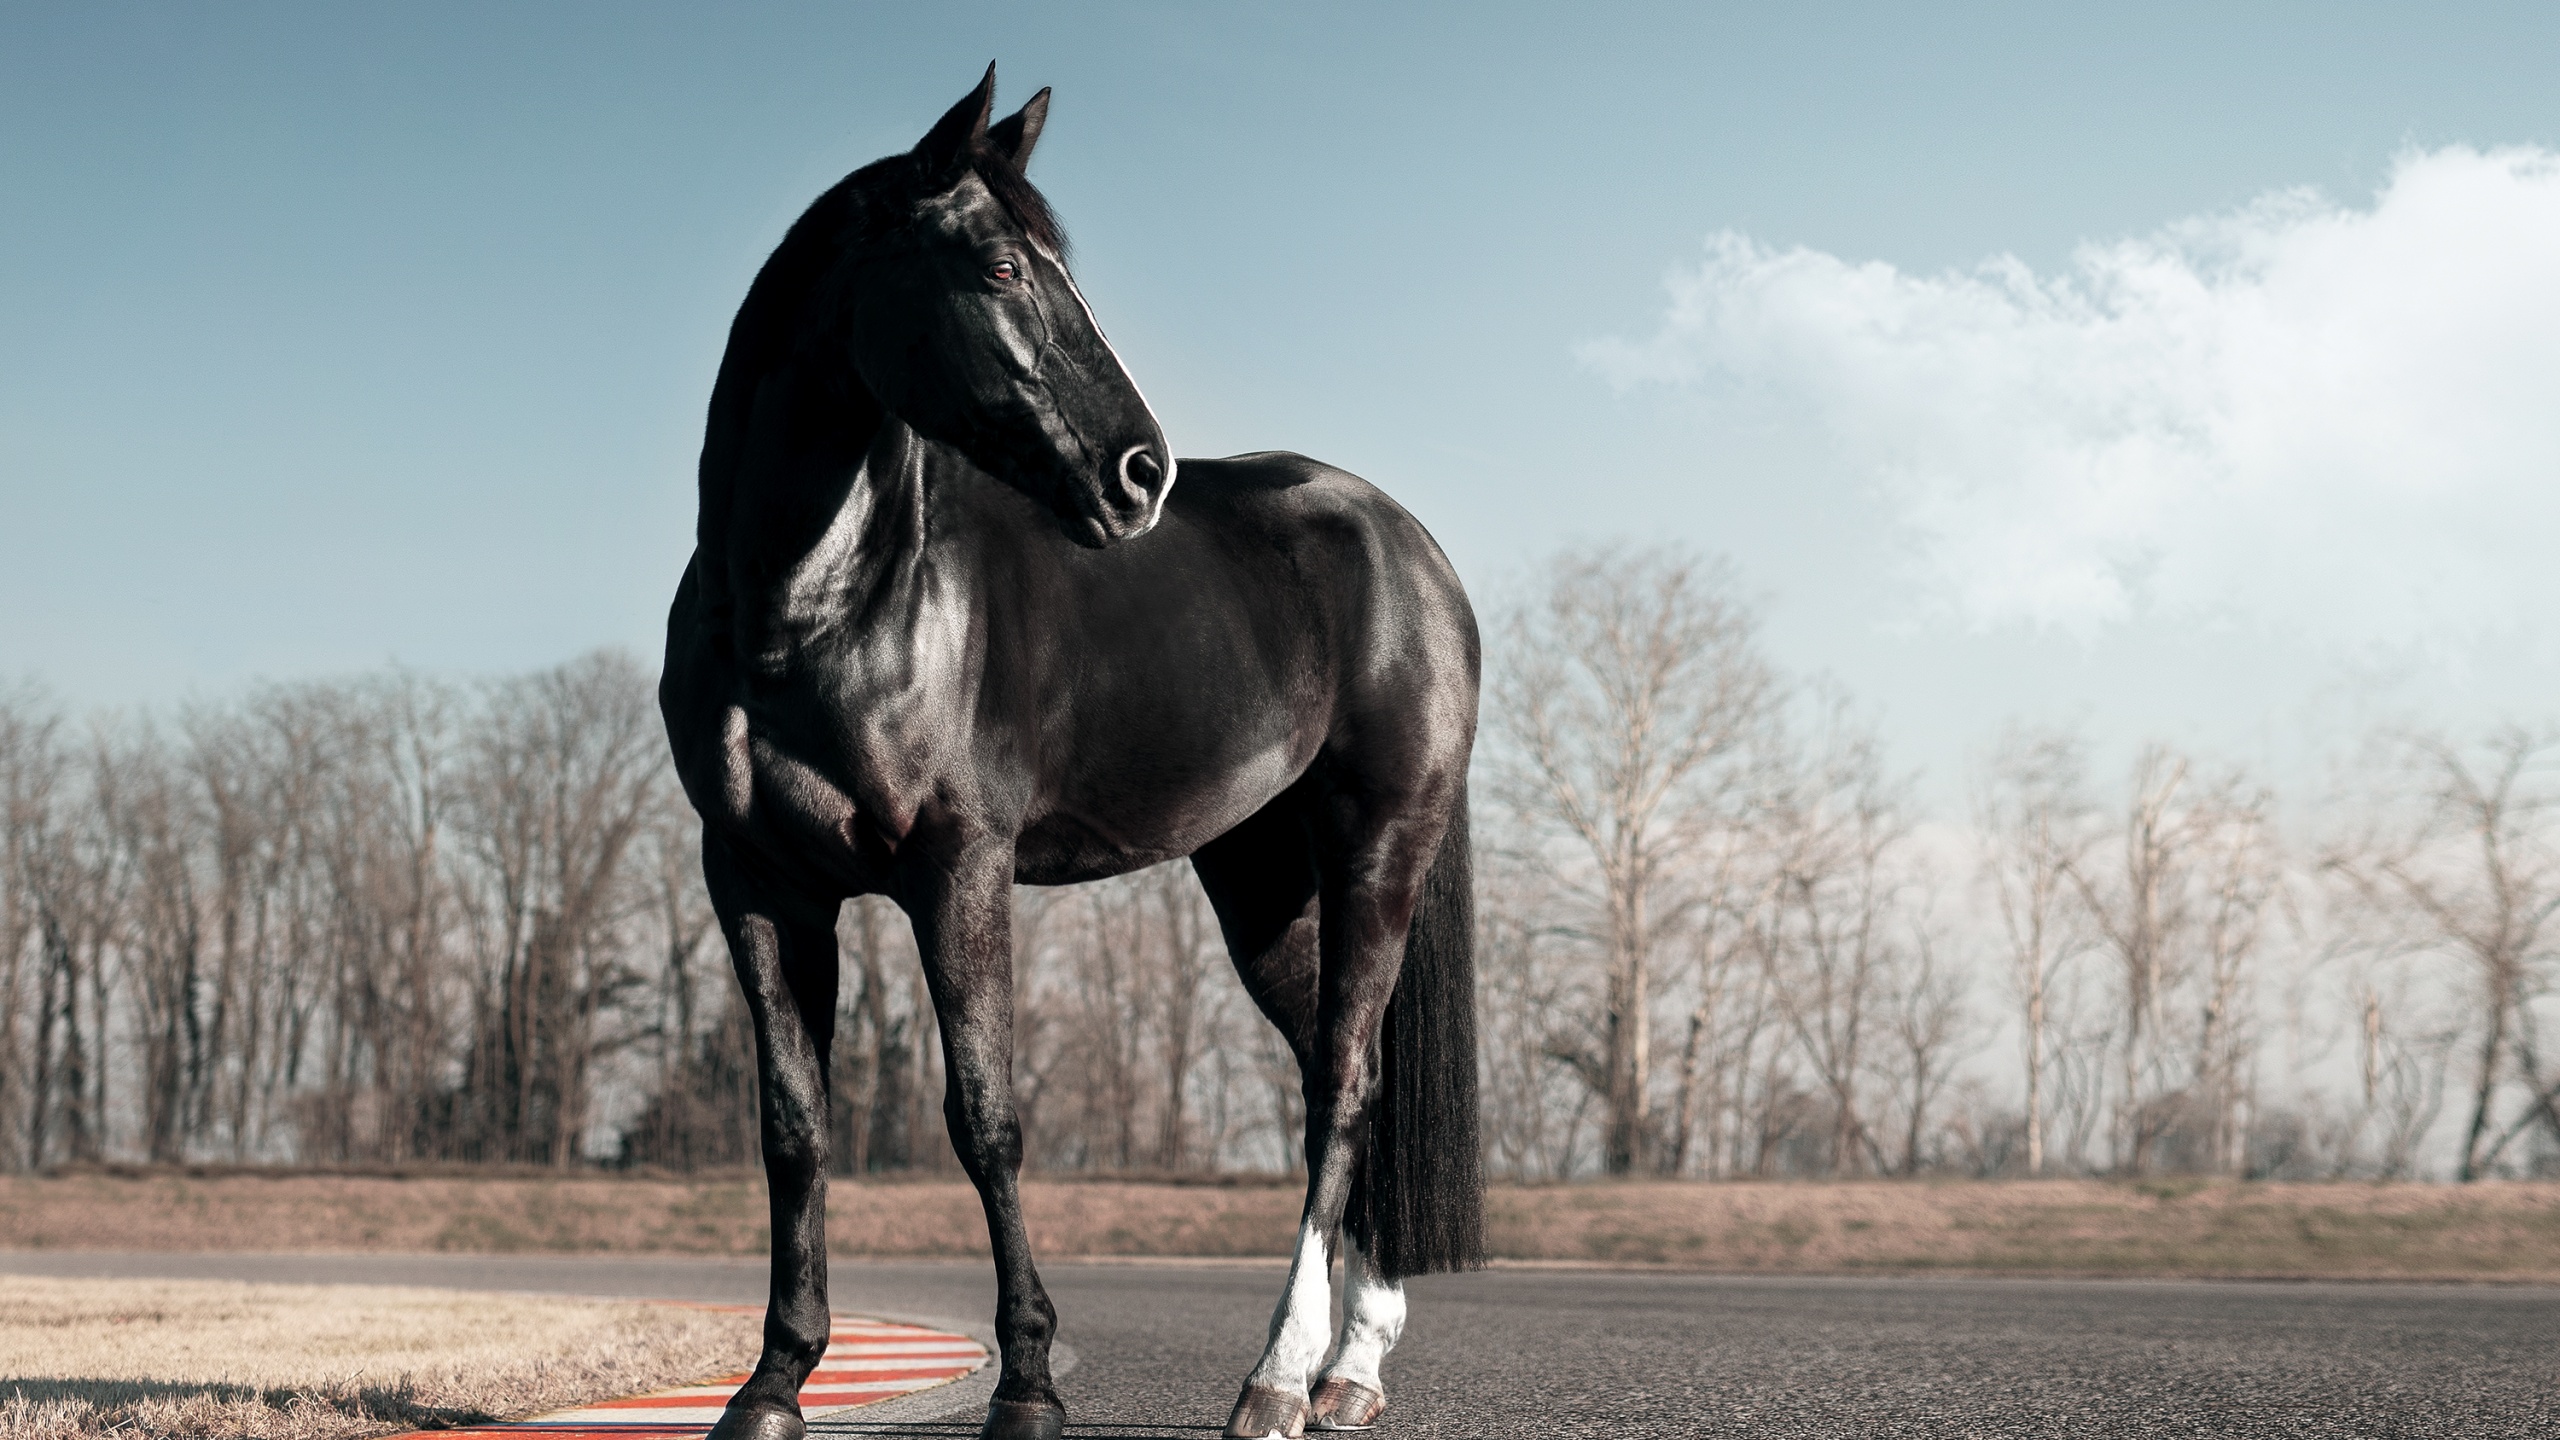 Cool Black Horse